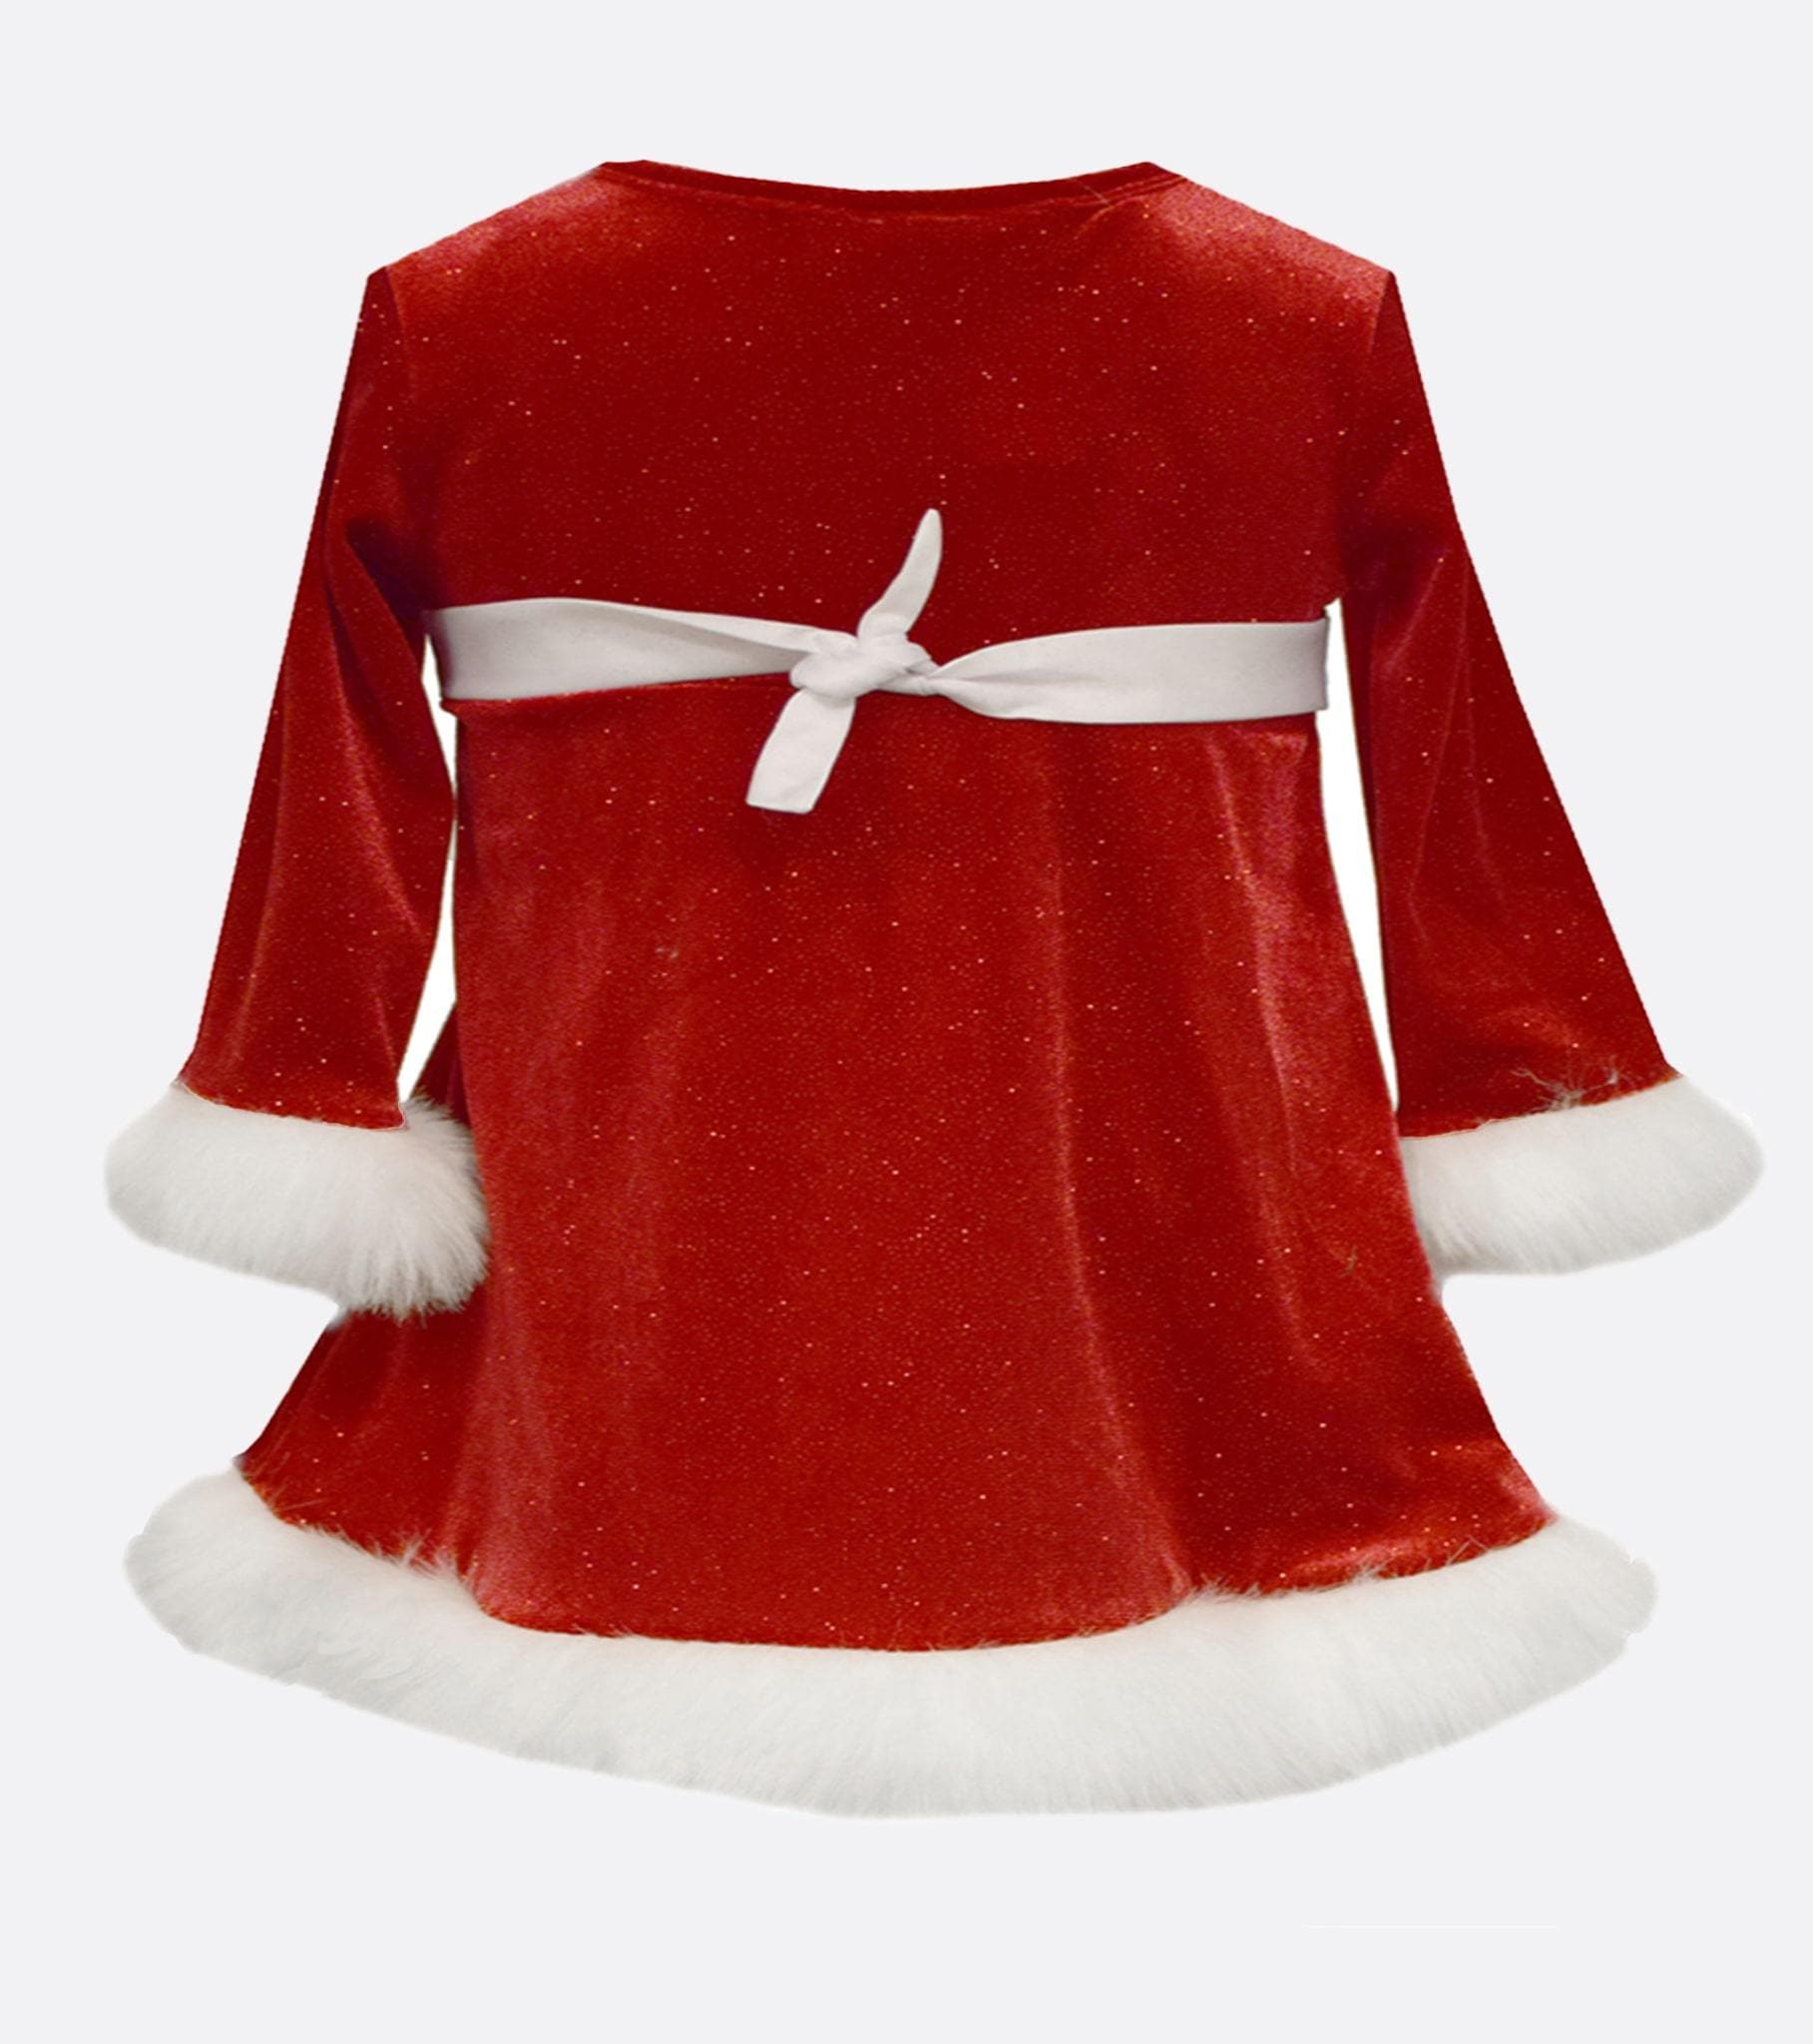 Big savings on quality 'Santa Baby' Sequin Dress by Simply